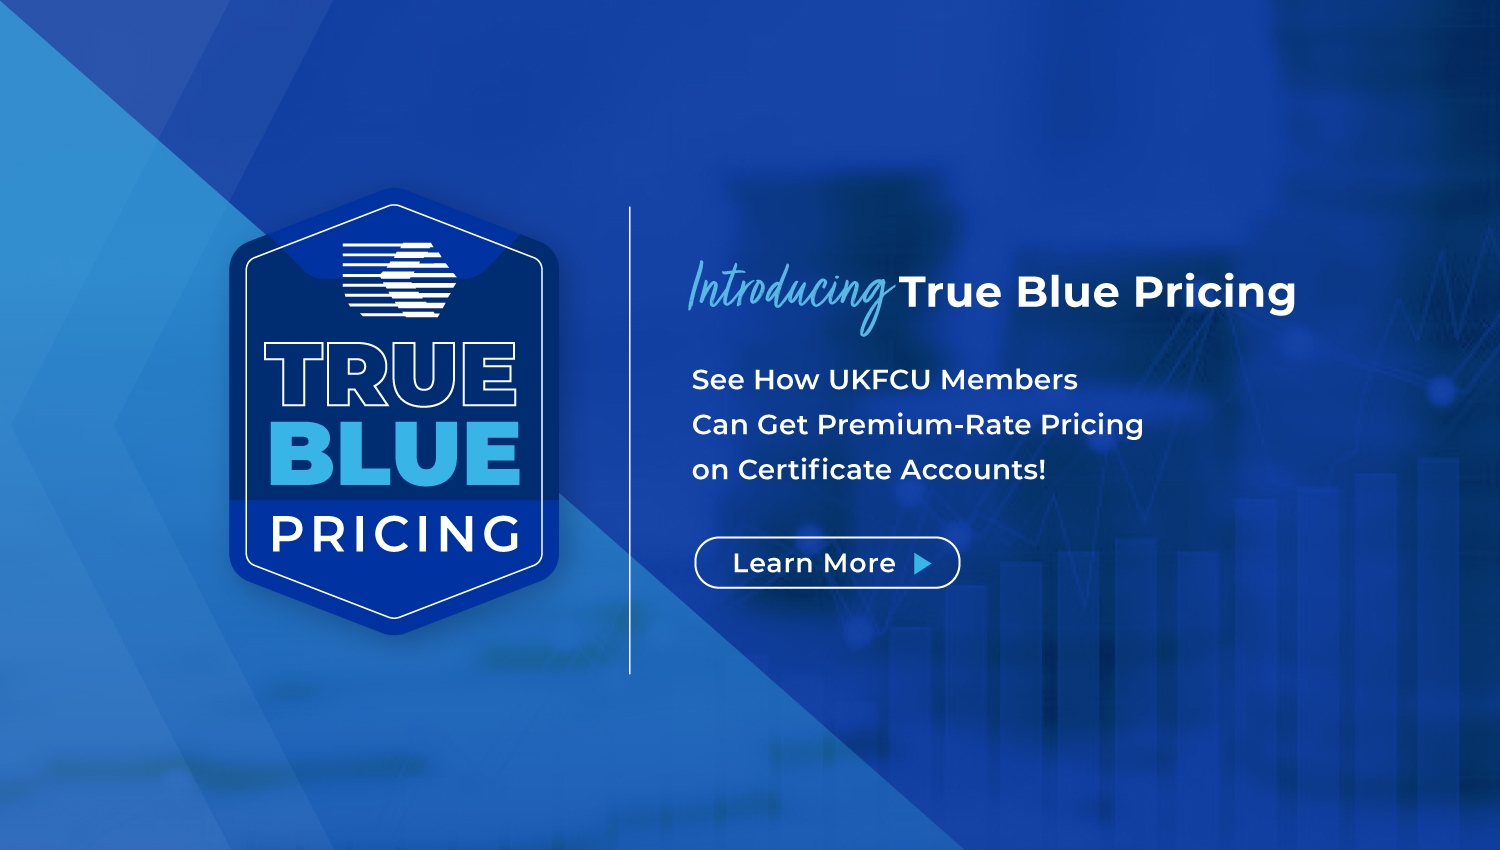 True Blue Pricing